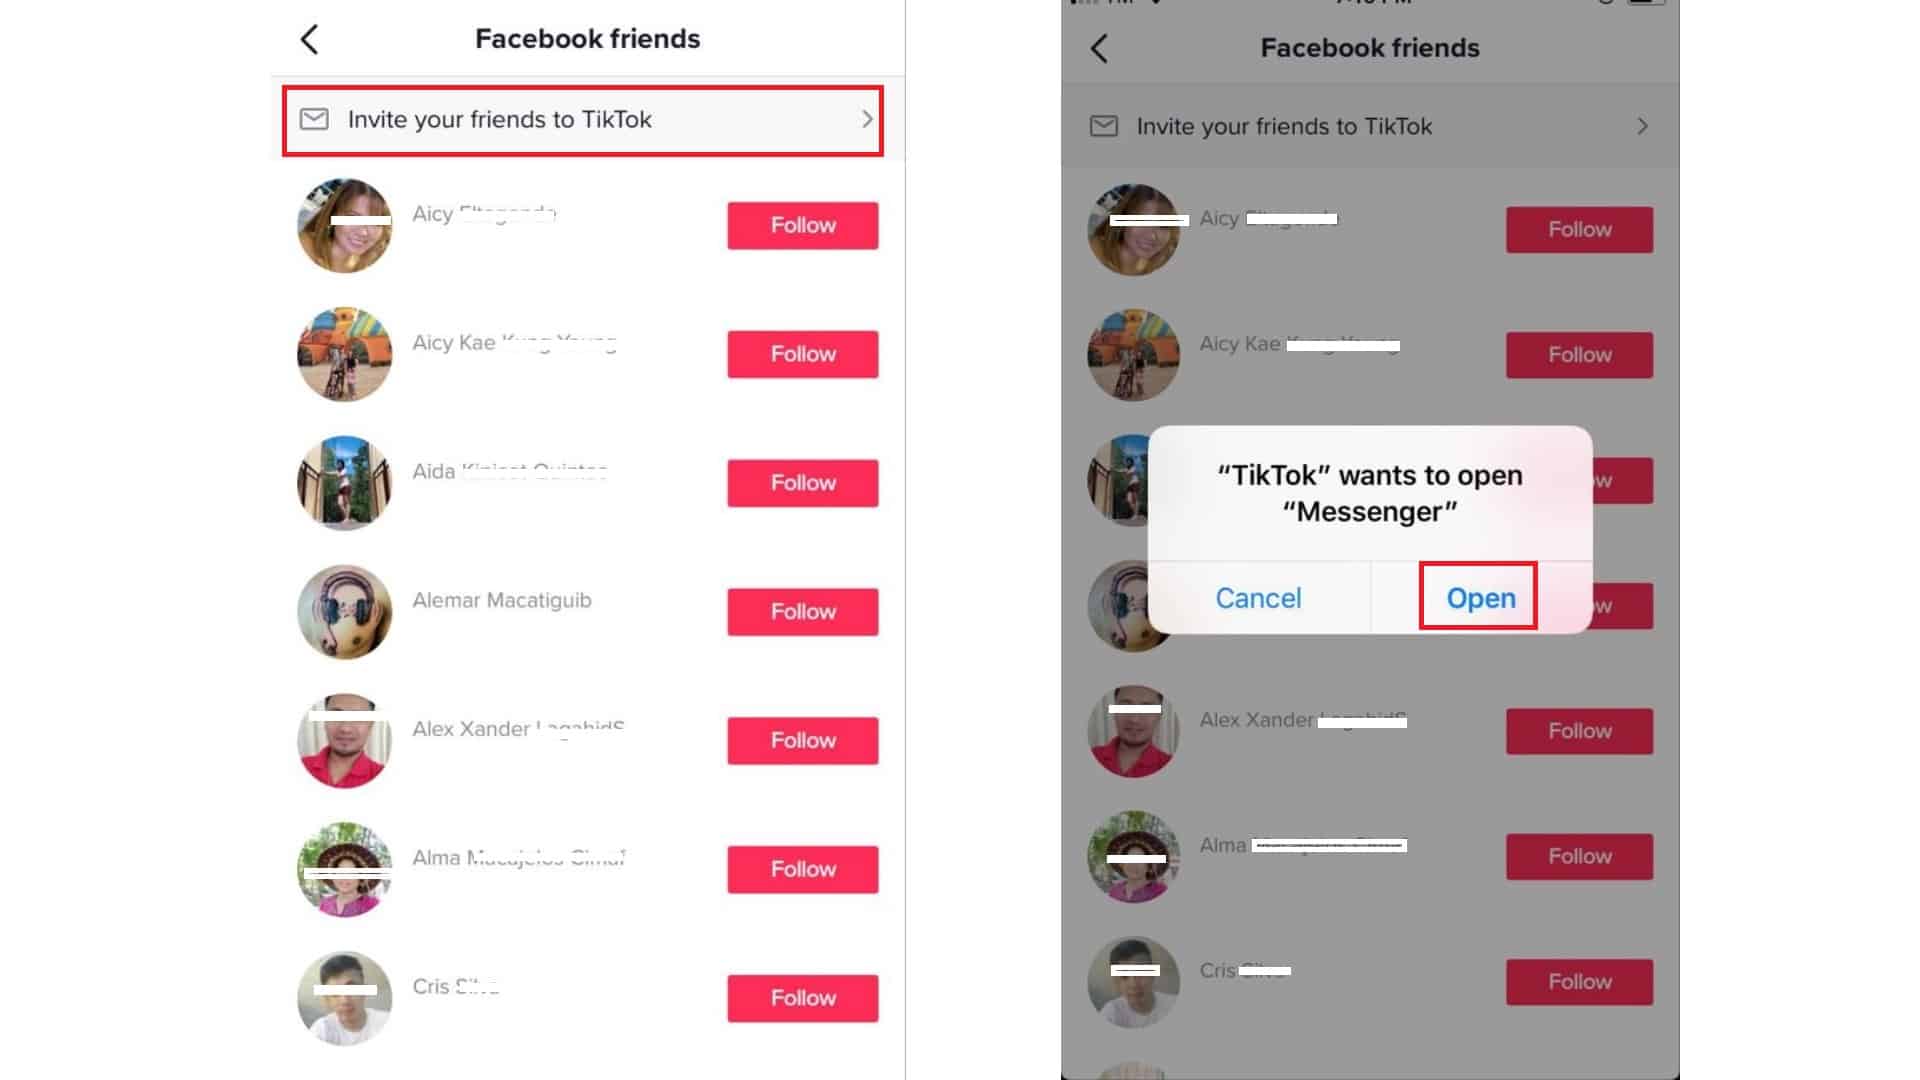 Invite-Facebook-Friends-on-iPhone-TikTok-App-2020-guide